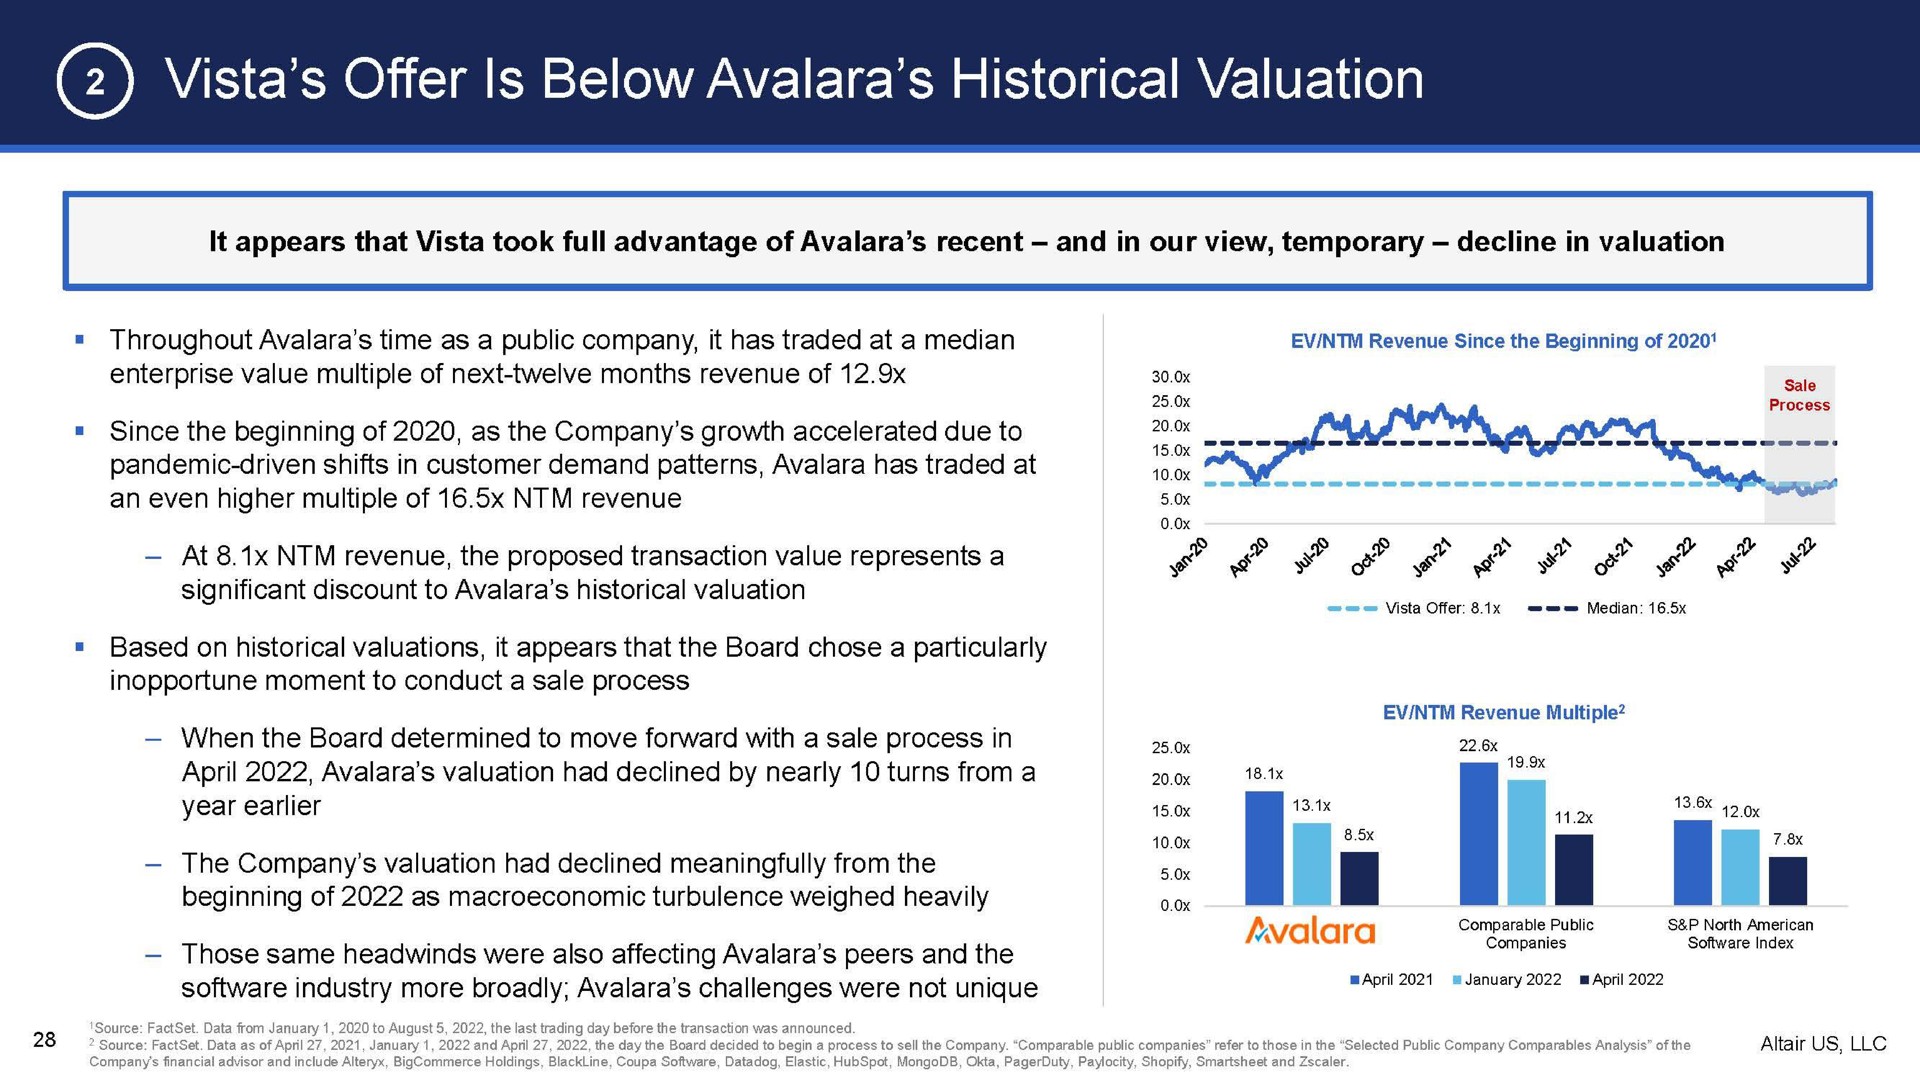 vista offer is below historical valuation | Altair US LLC